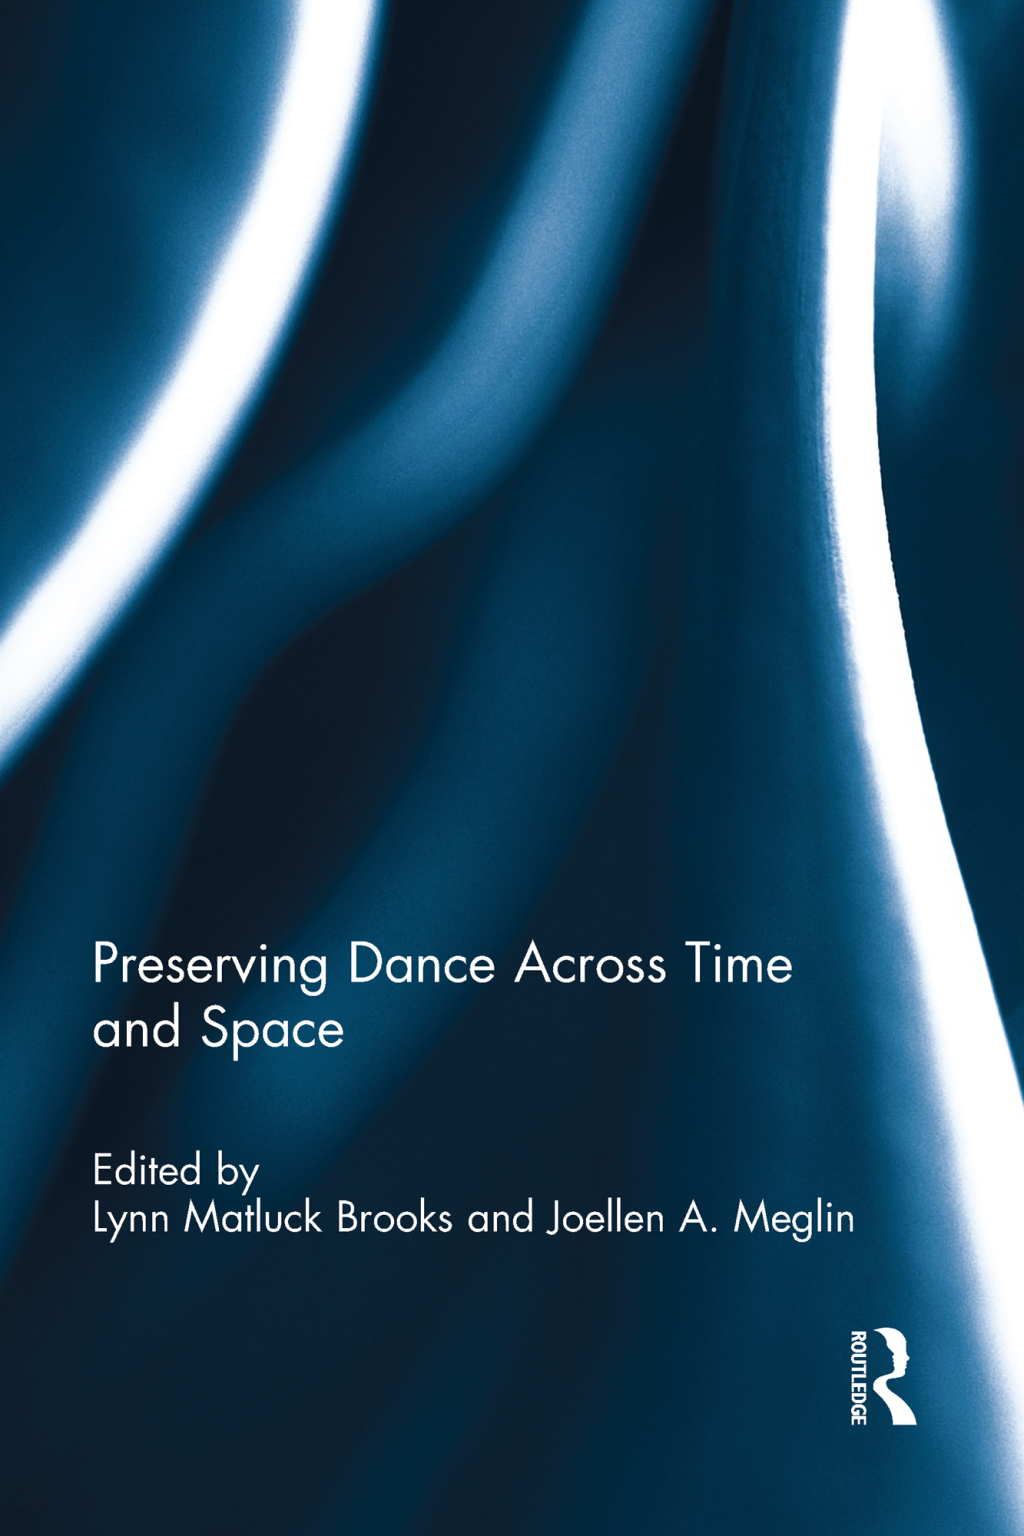 Preserving Dance Across Time and Space (eBook) - Lynn Matluck Brooks